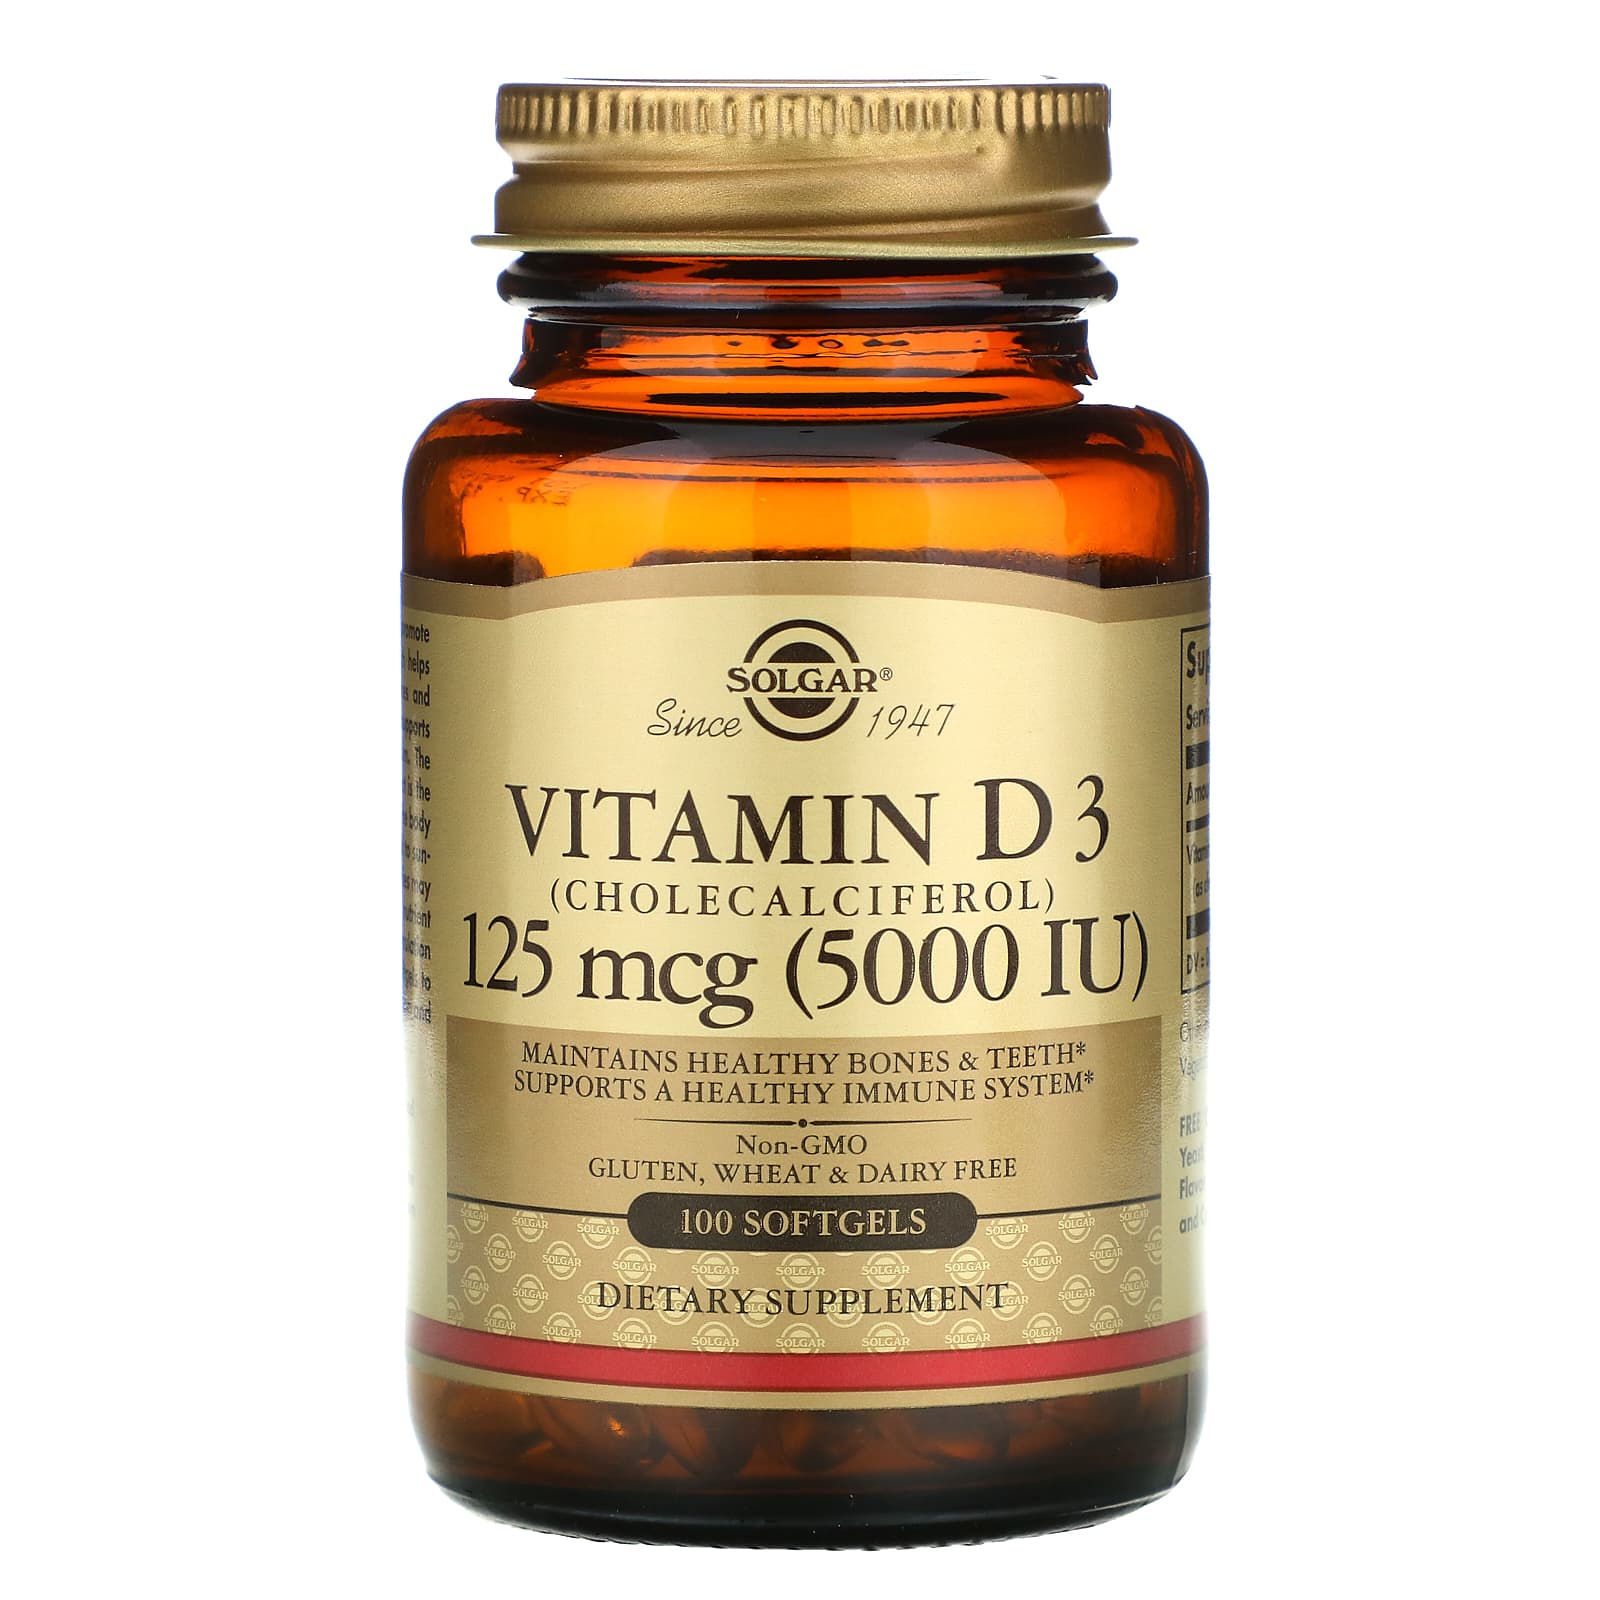 Solgar Vitamin D3 Cholecalciferol 125 MCG 5000 IU, 100 Softge